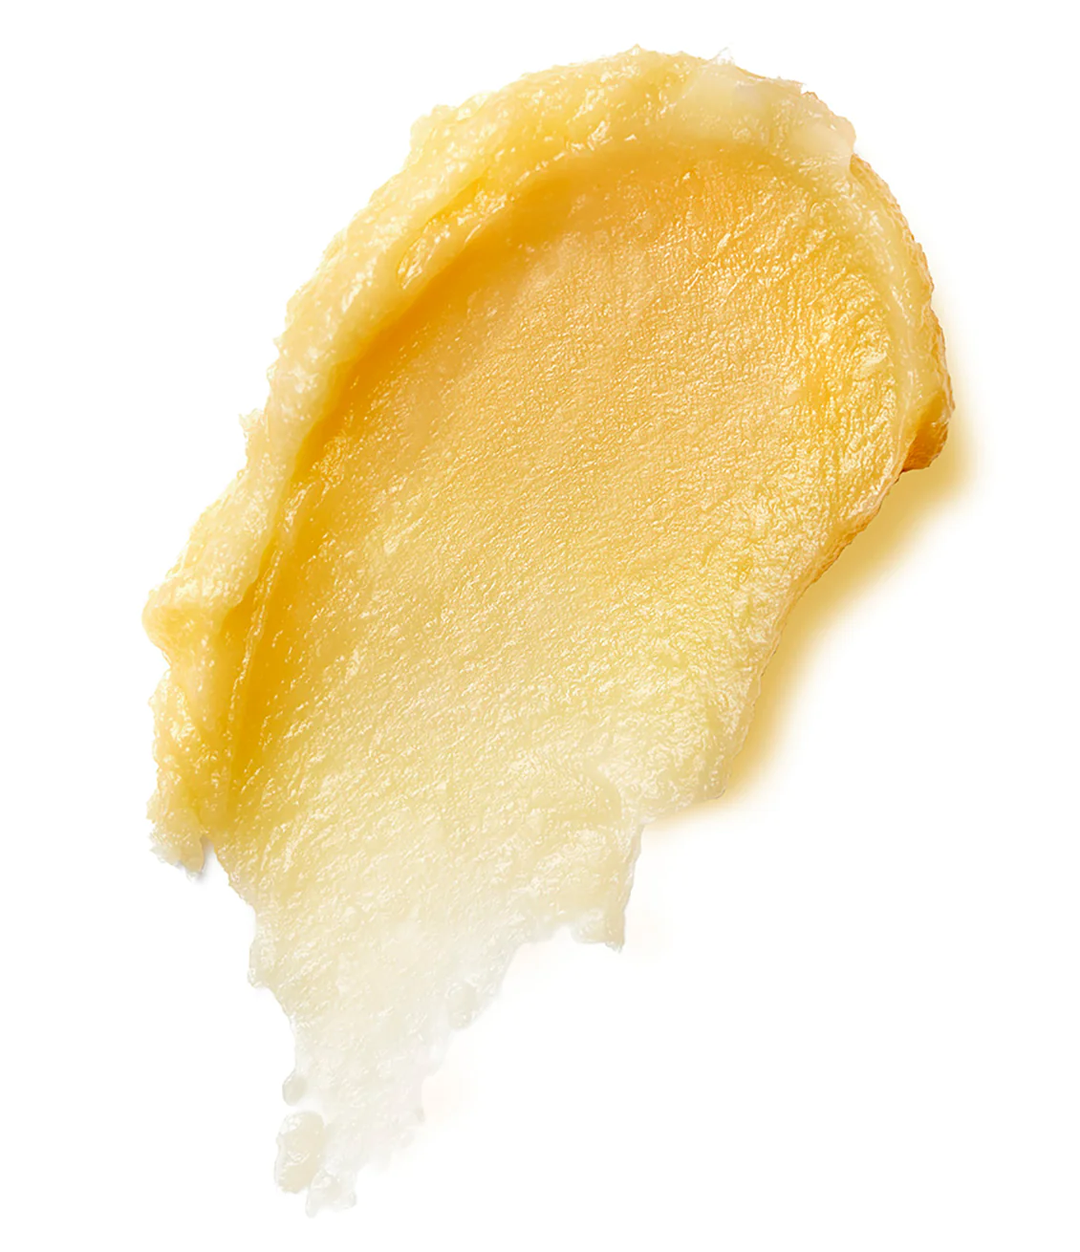 Naturopathica Manuka Honey Cleansing Balm texture